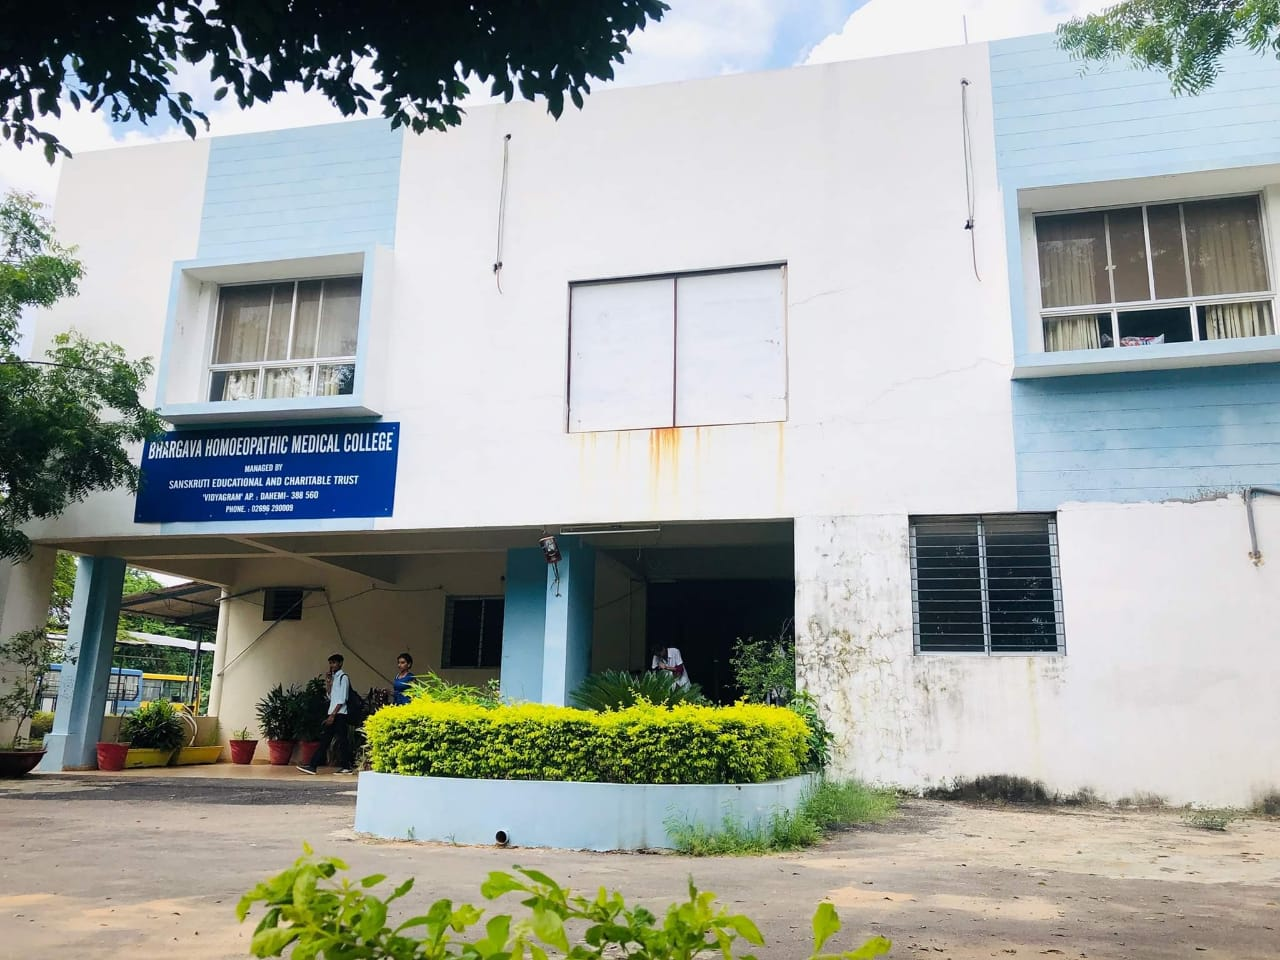 Bhargava Homeopathic Medical College